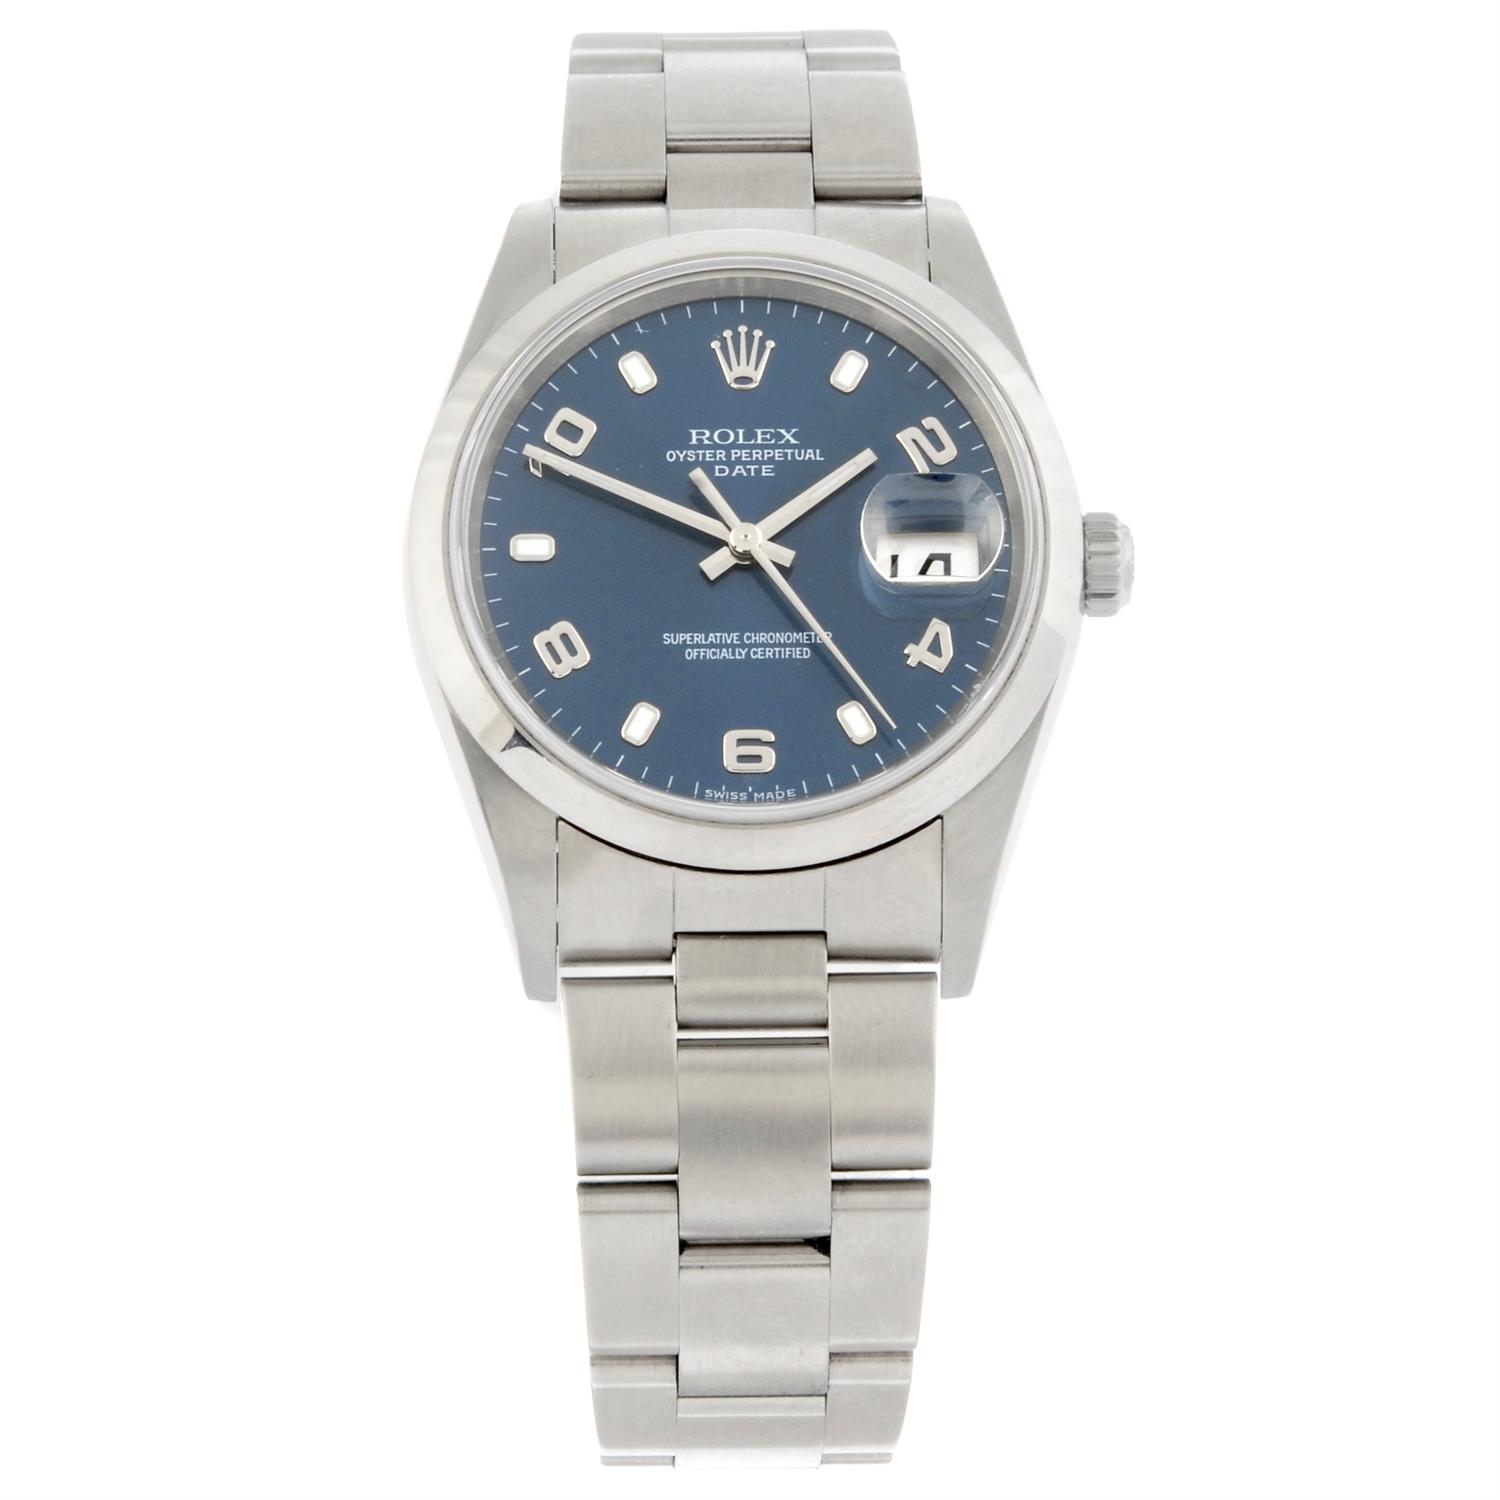 Rolex - an Oyster Perpetual Date watch, 34mm.